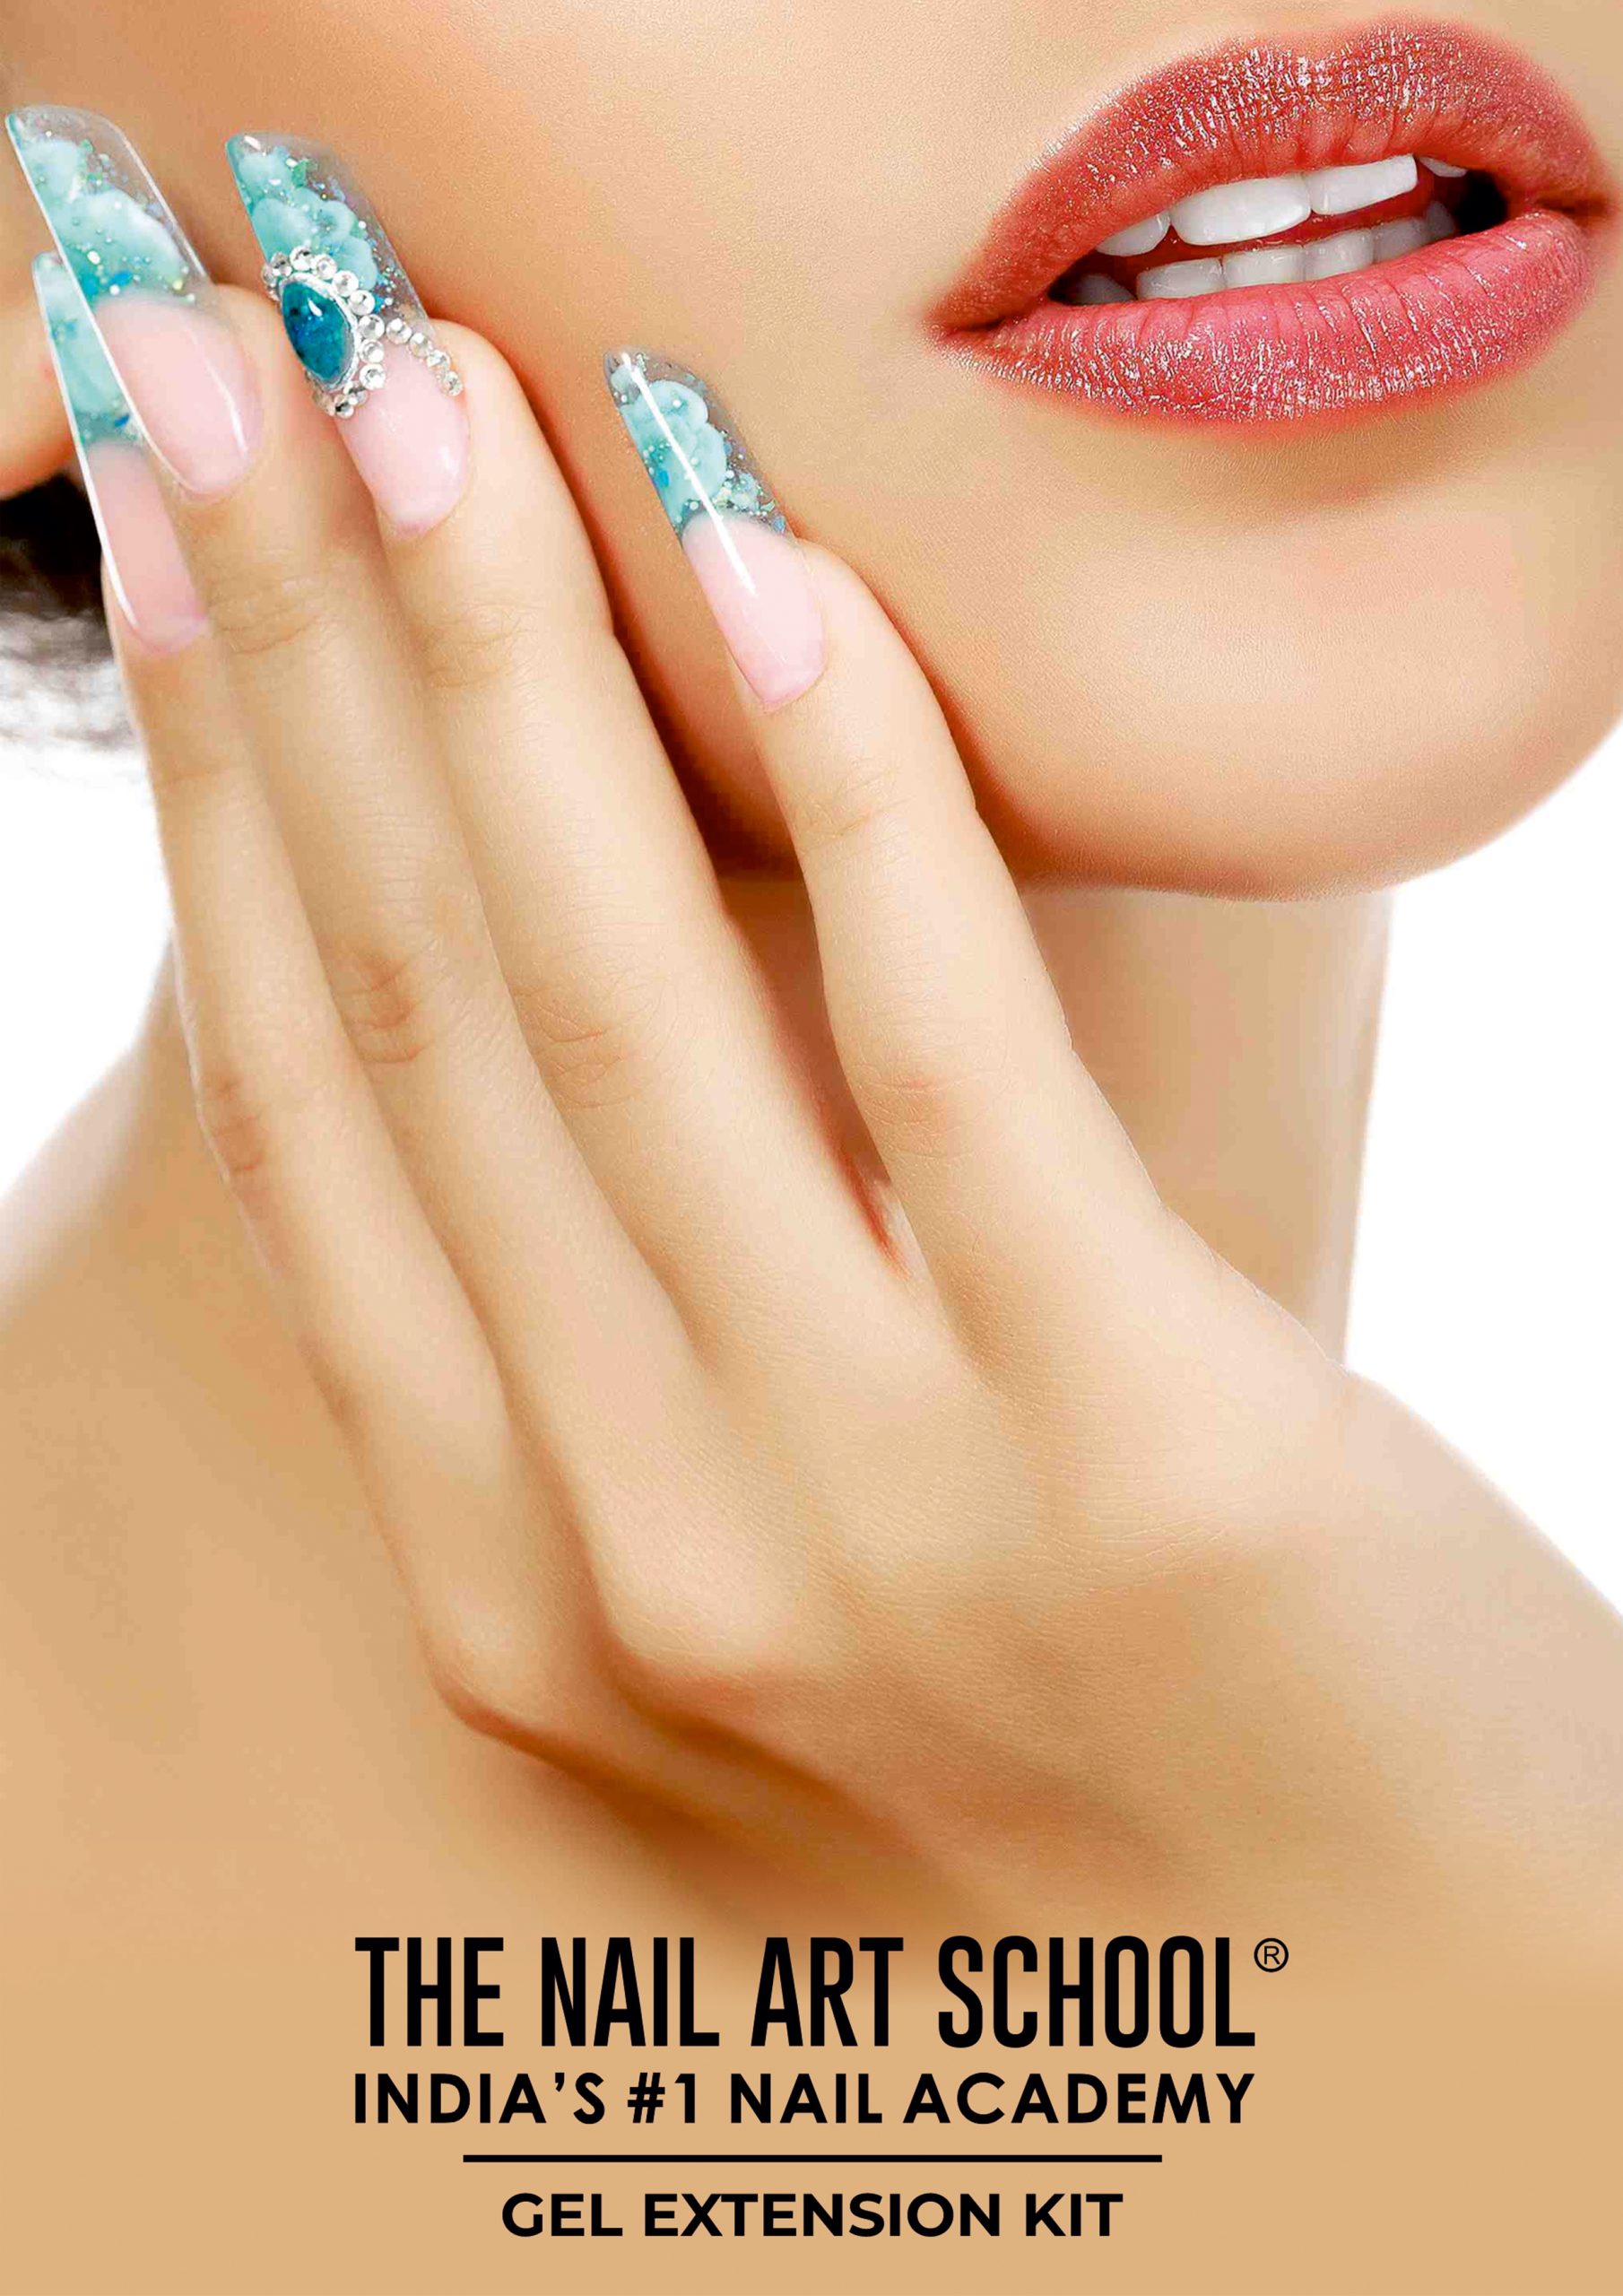 Glamorous Nail Art & Academy in Borivali West,Mumbai - Best Beauty Parlours  For Nail Art in Mumbai - Justdial